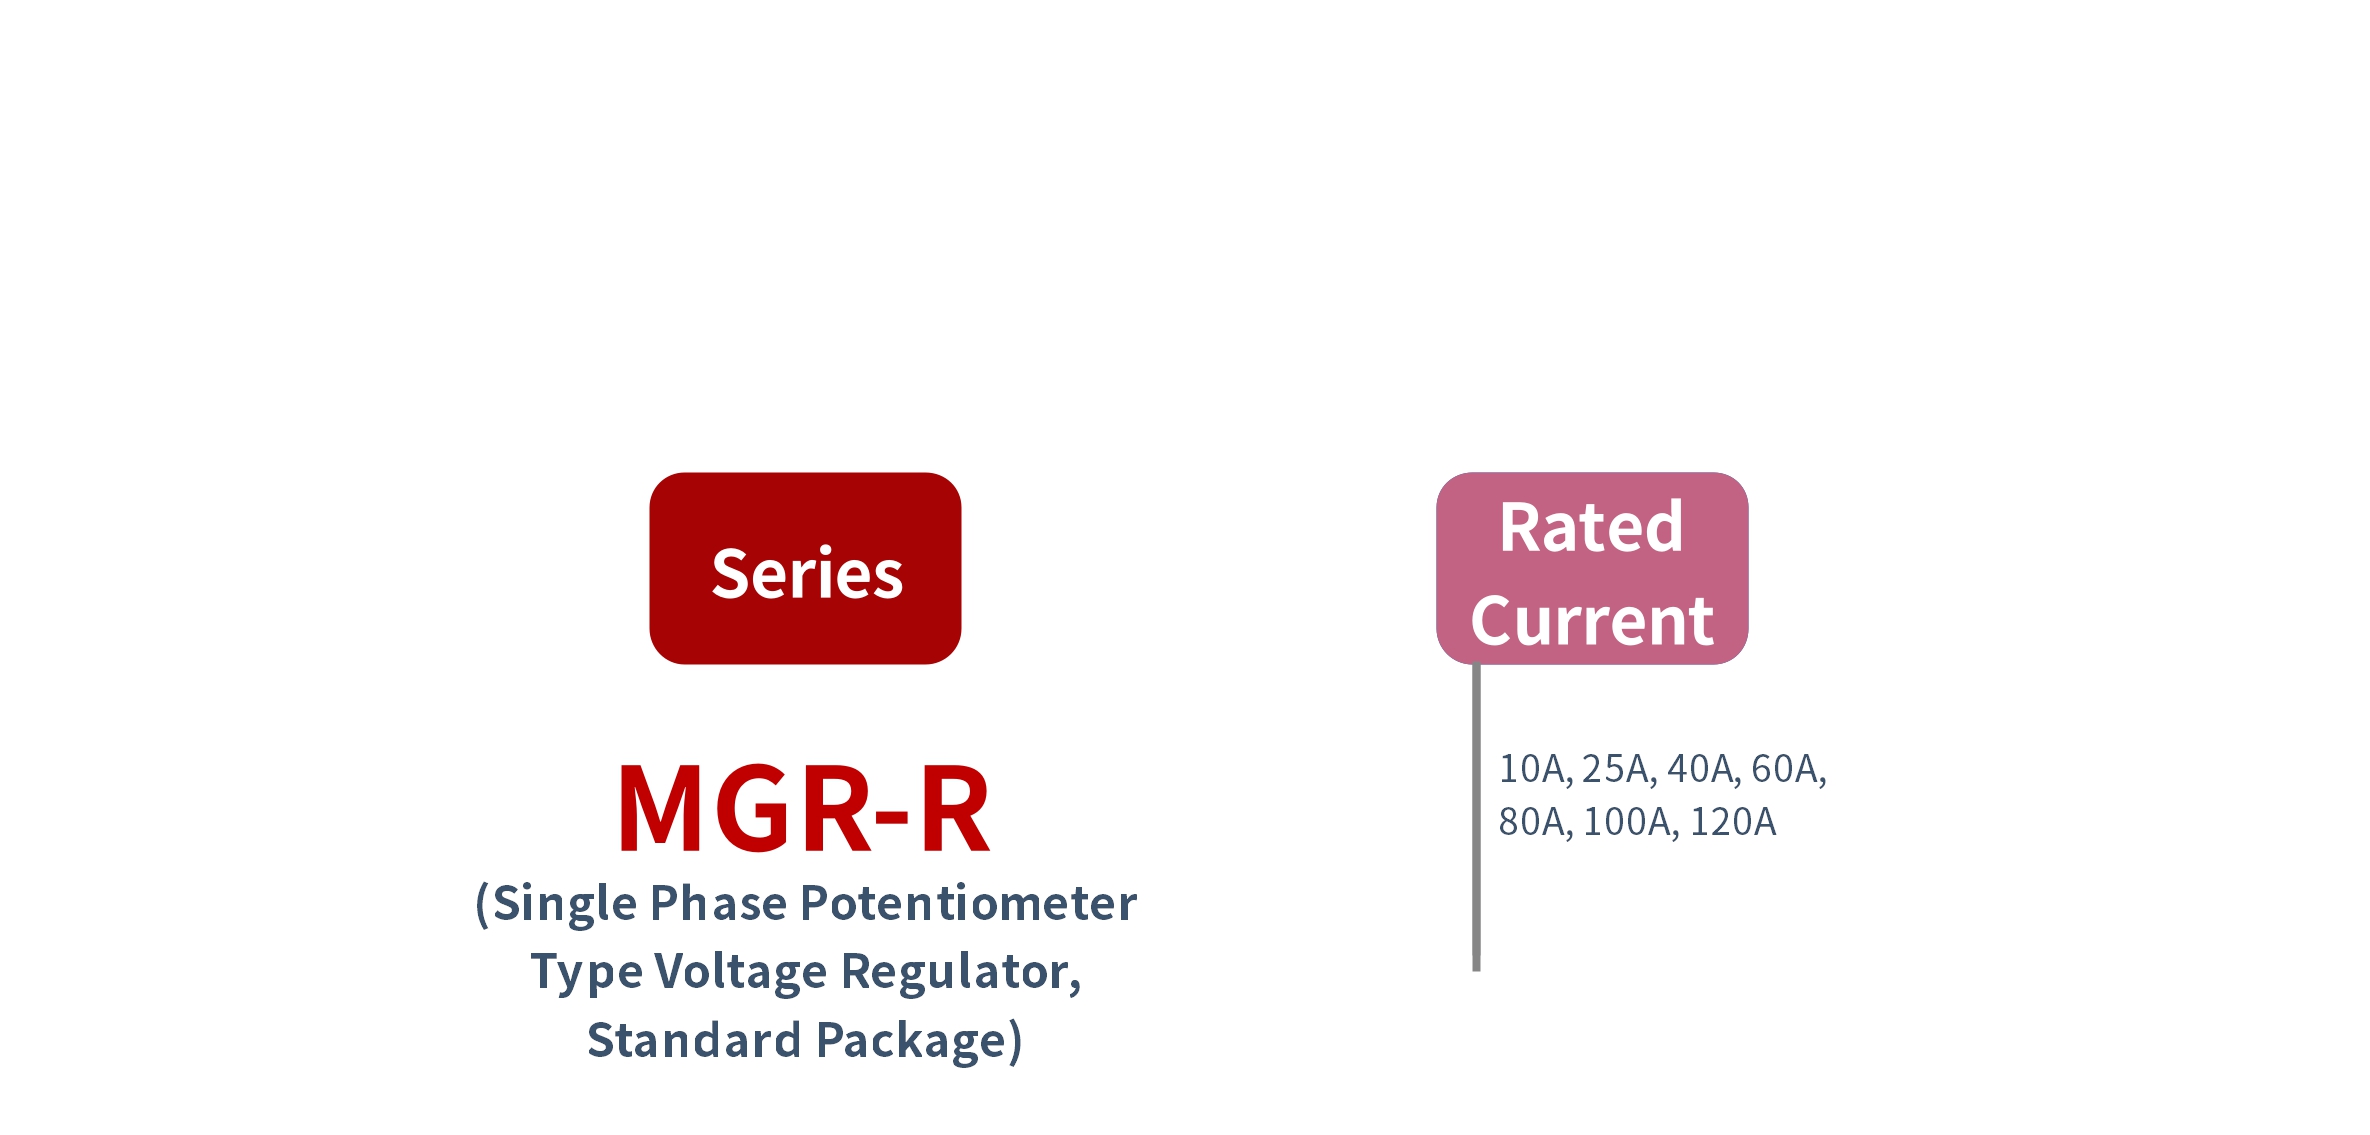 How to order MGR-R Series Voltage Power Regulator